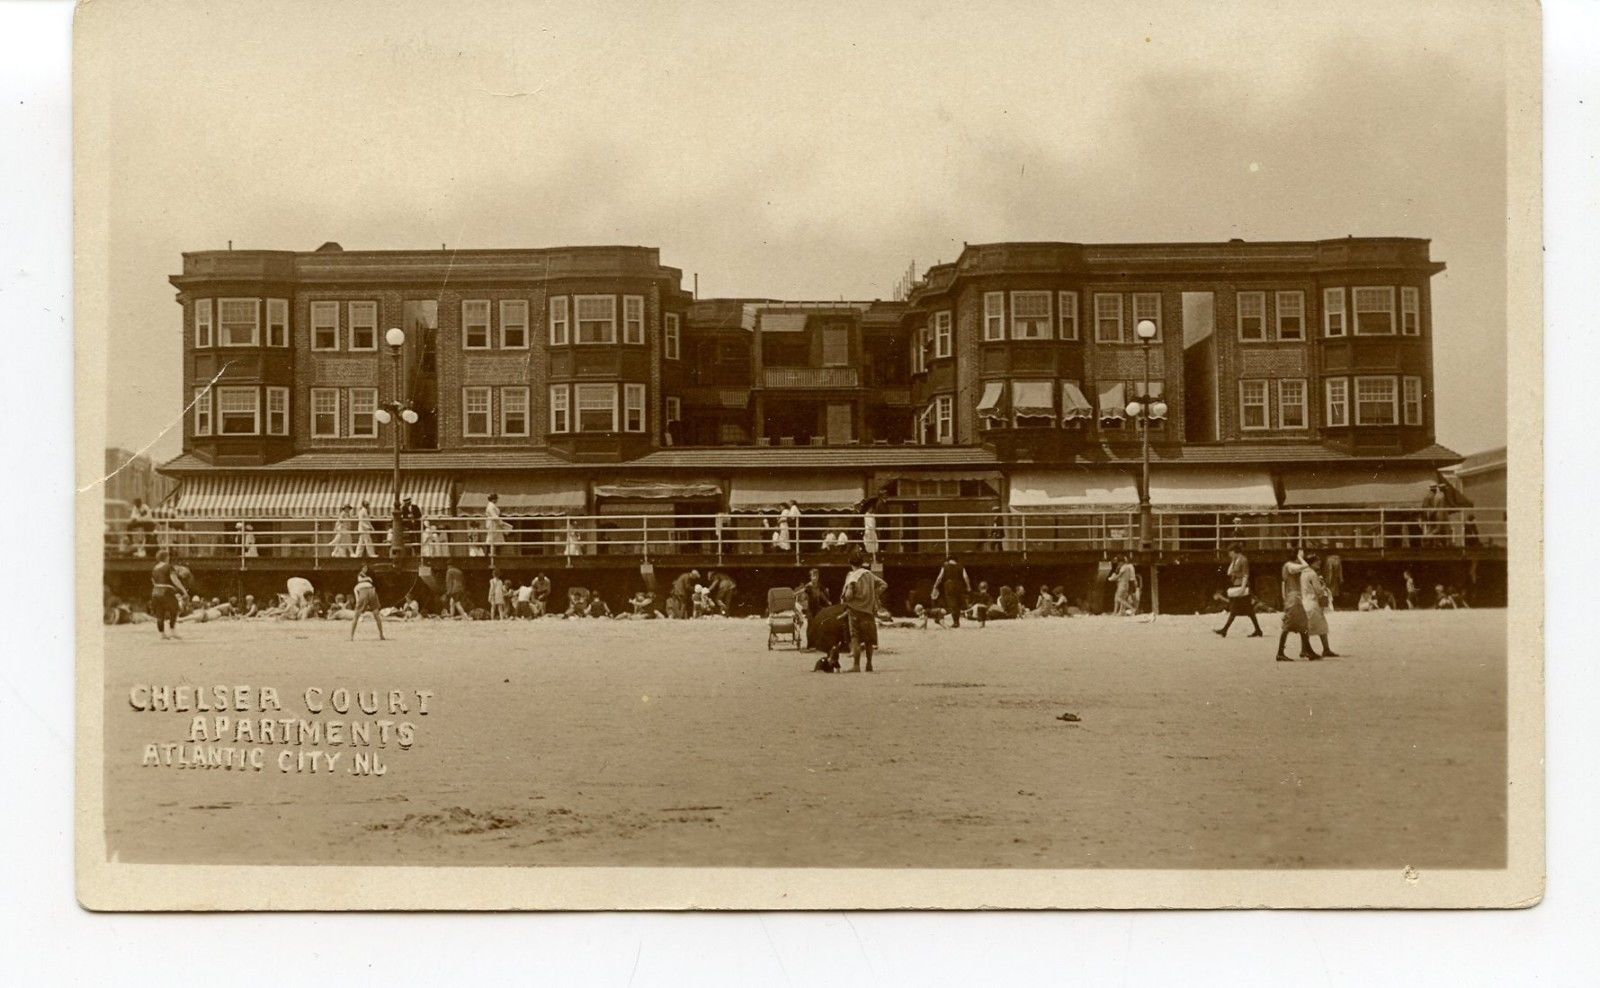 Atlantic City - Chelsea Court Apartments - c 1920